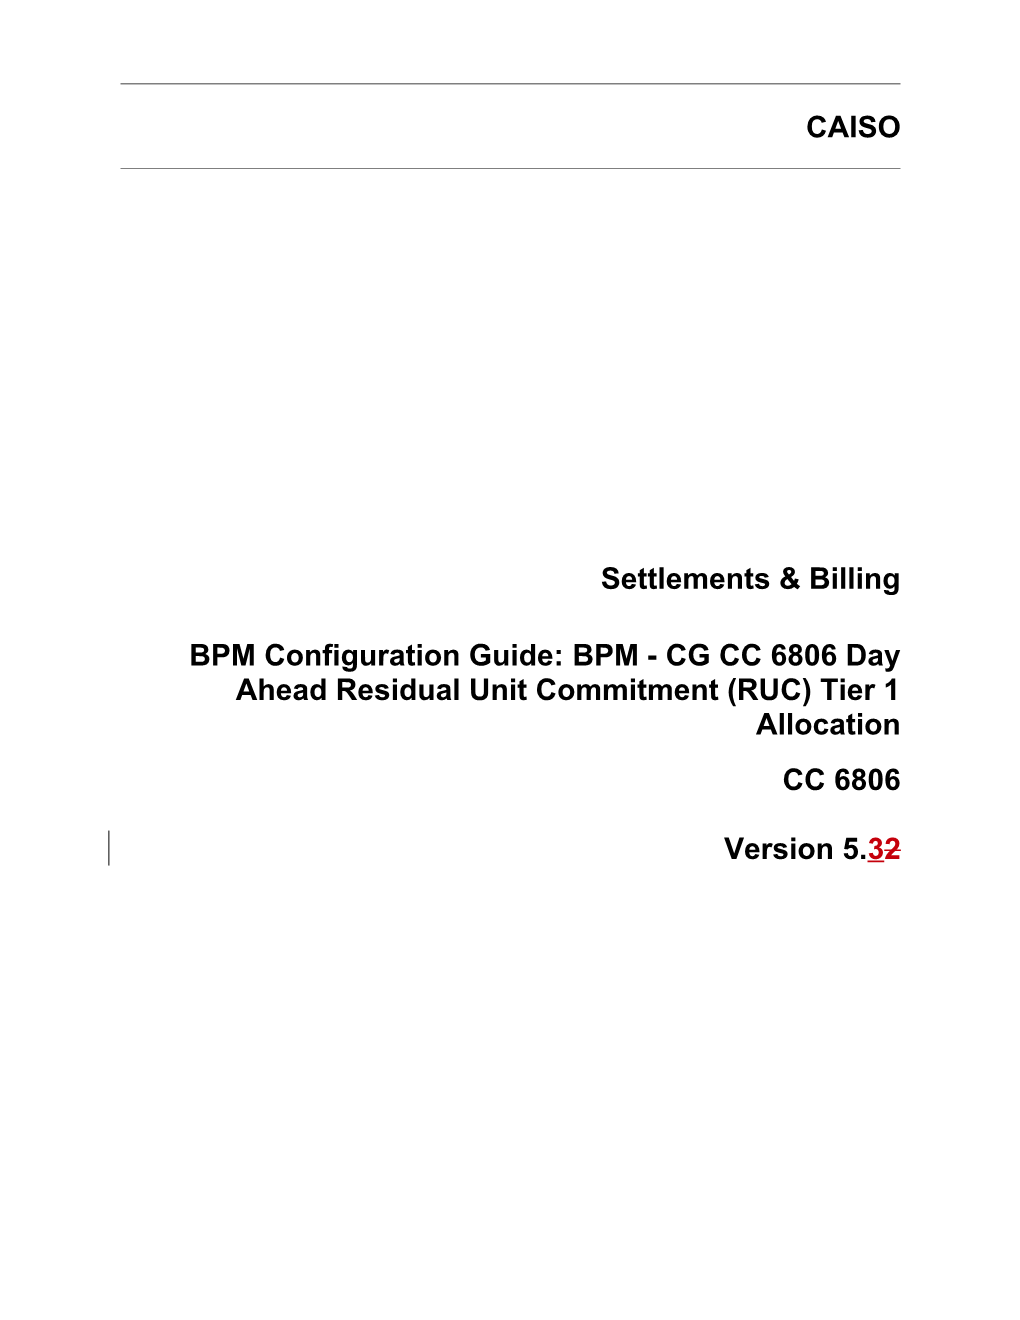 BPM - CG CC 6806 Day Ahead Residual Unit Commitment (RUC) Tier 1 Allocation